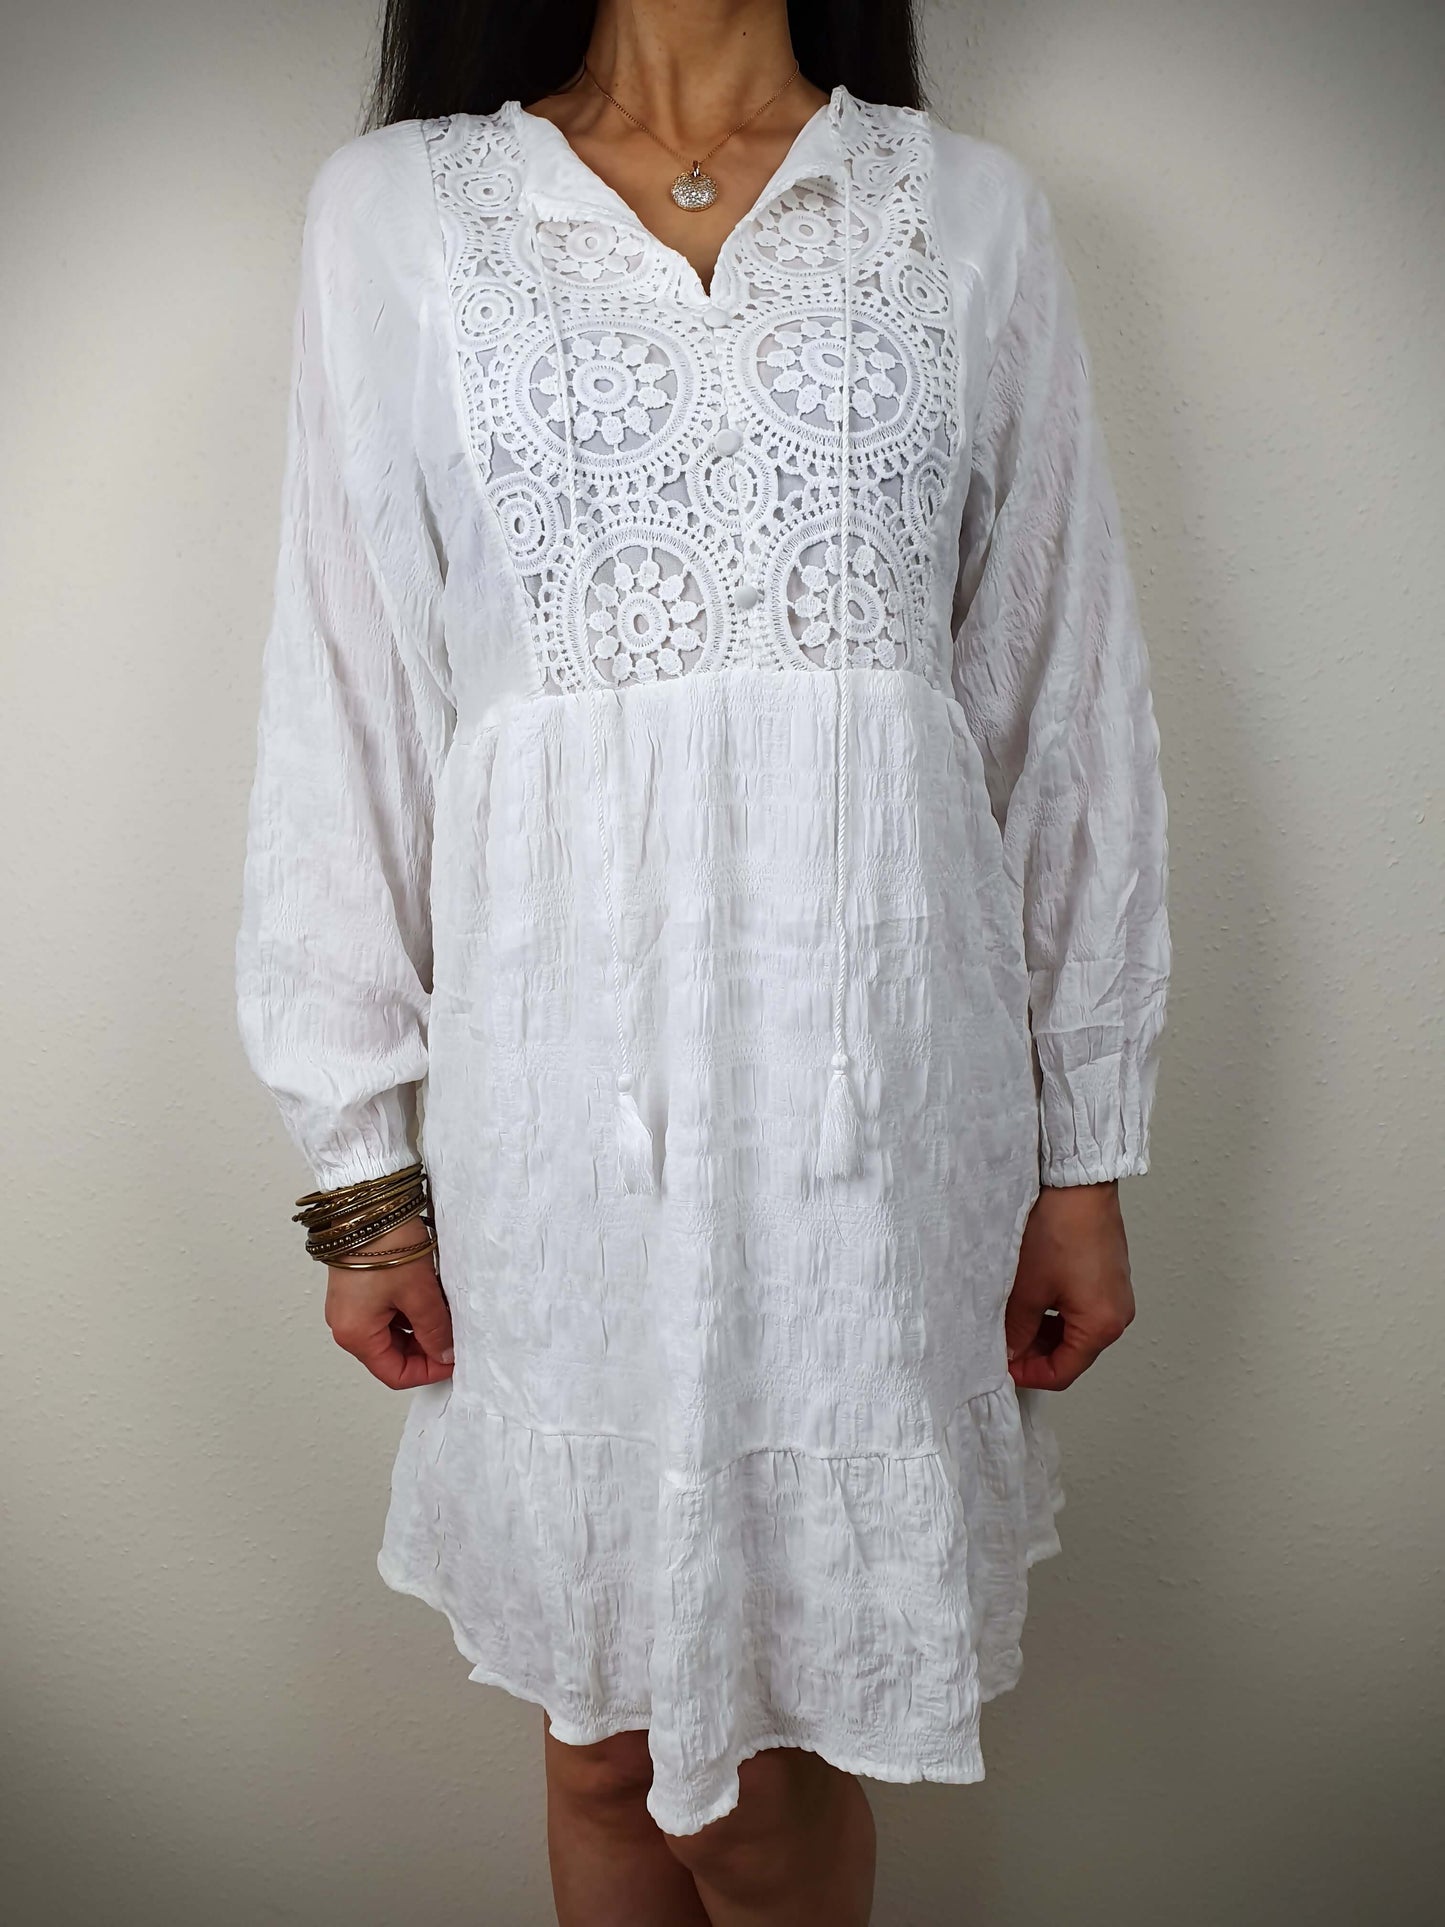 Robe blanche en broderie anglaise à découvrir sur www.gayano.fr